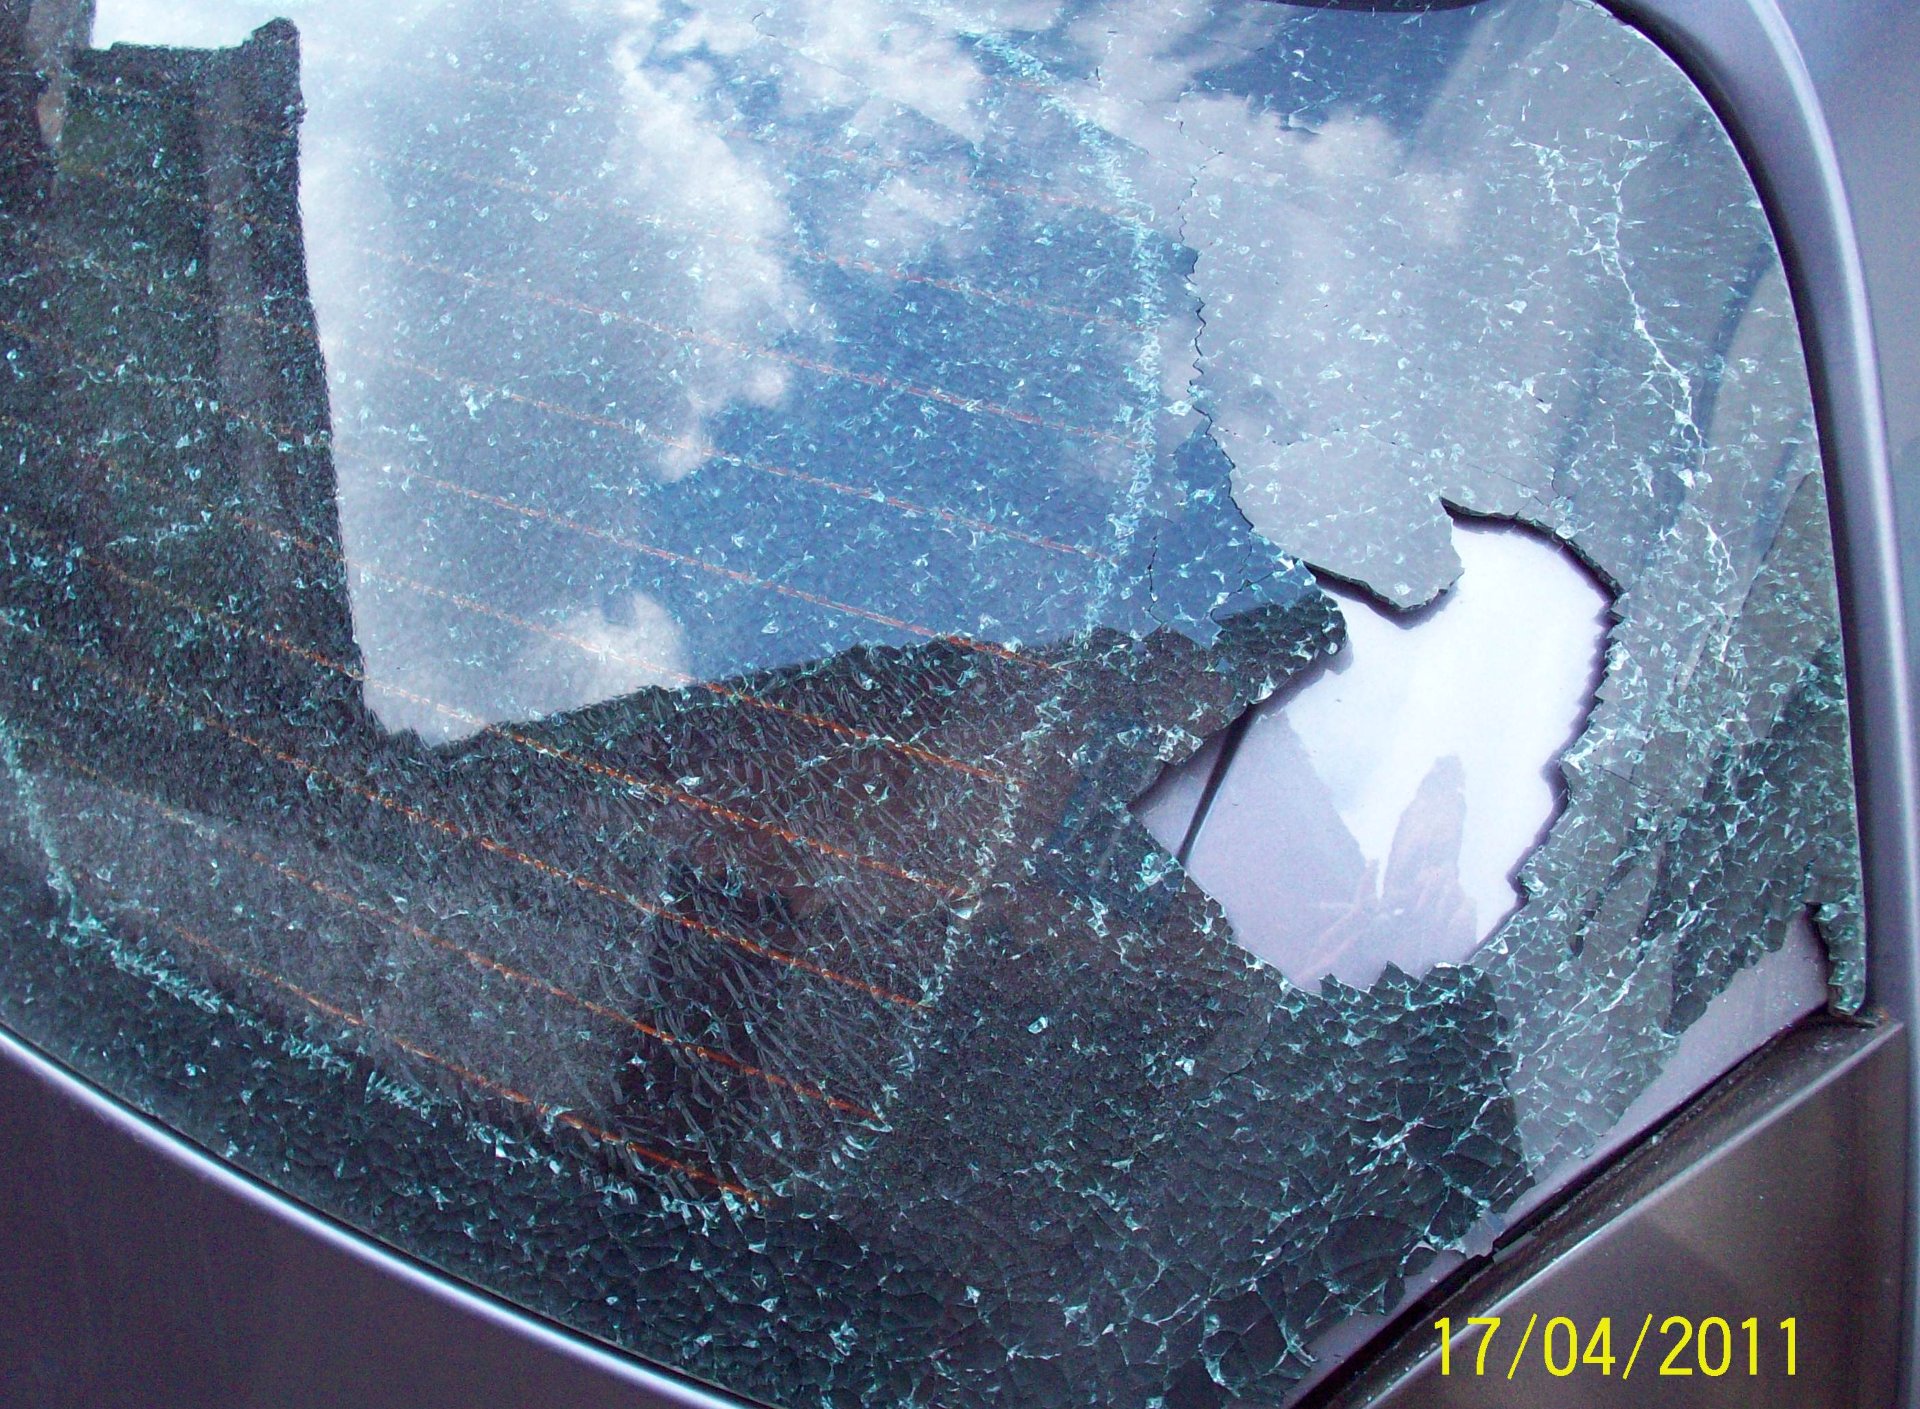 Z разбили. Разбитое стекло багажника машины. Ларгус с разбитым стеклом. Разбитое стекло с буквой z. Разбитые стекла с буквой z.